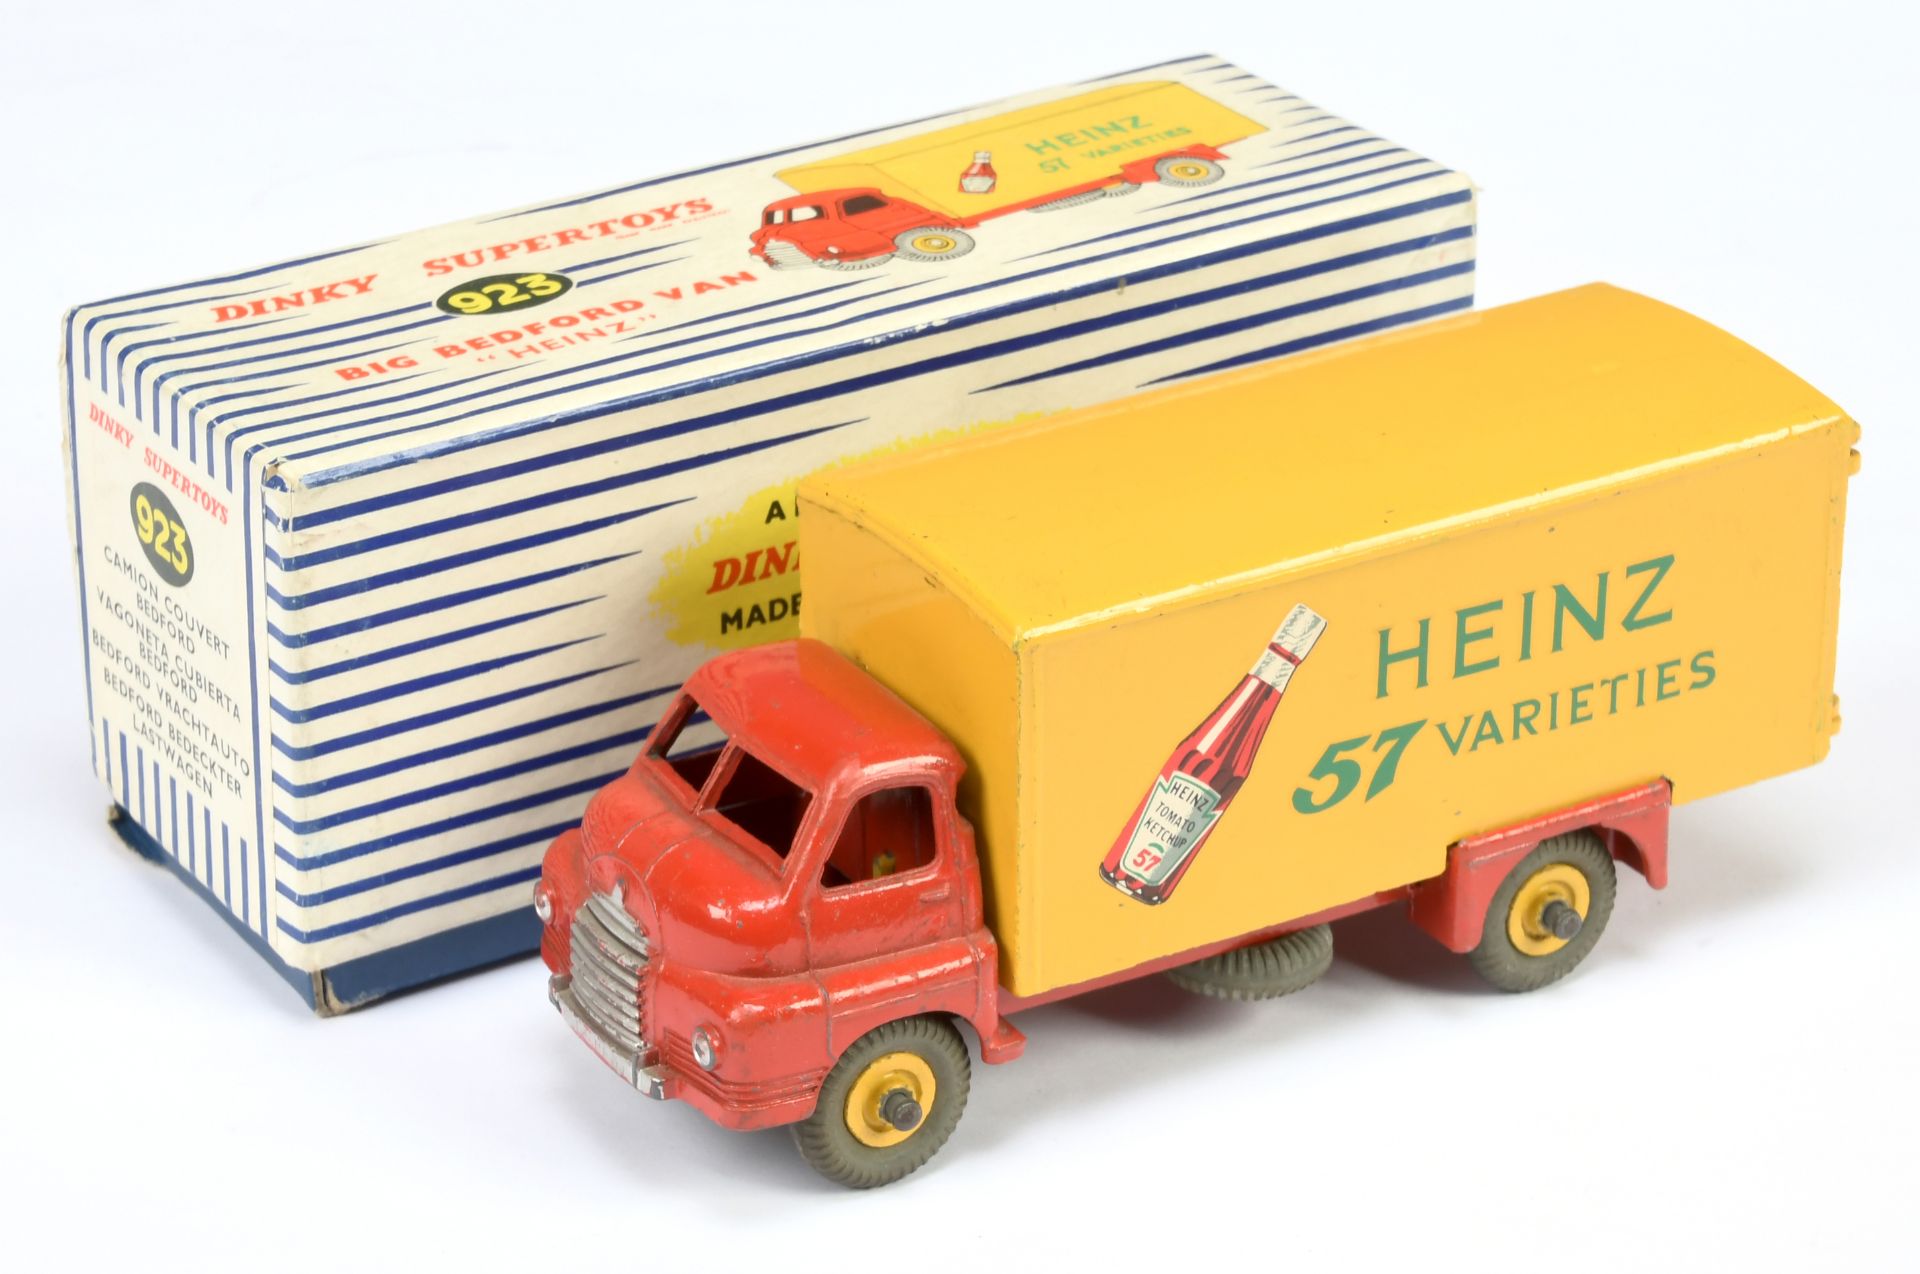 Dinky Toys 923 Big Bedford Van "Heinz 57 Varieties" Harder To Find Sauce Bottle Issue  - Red cab ...